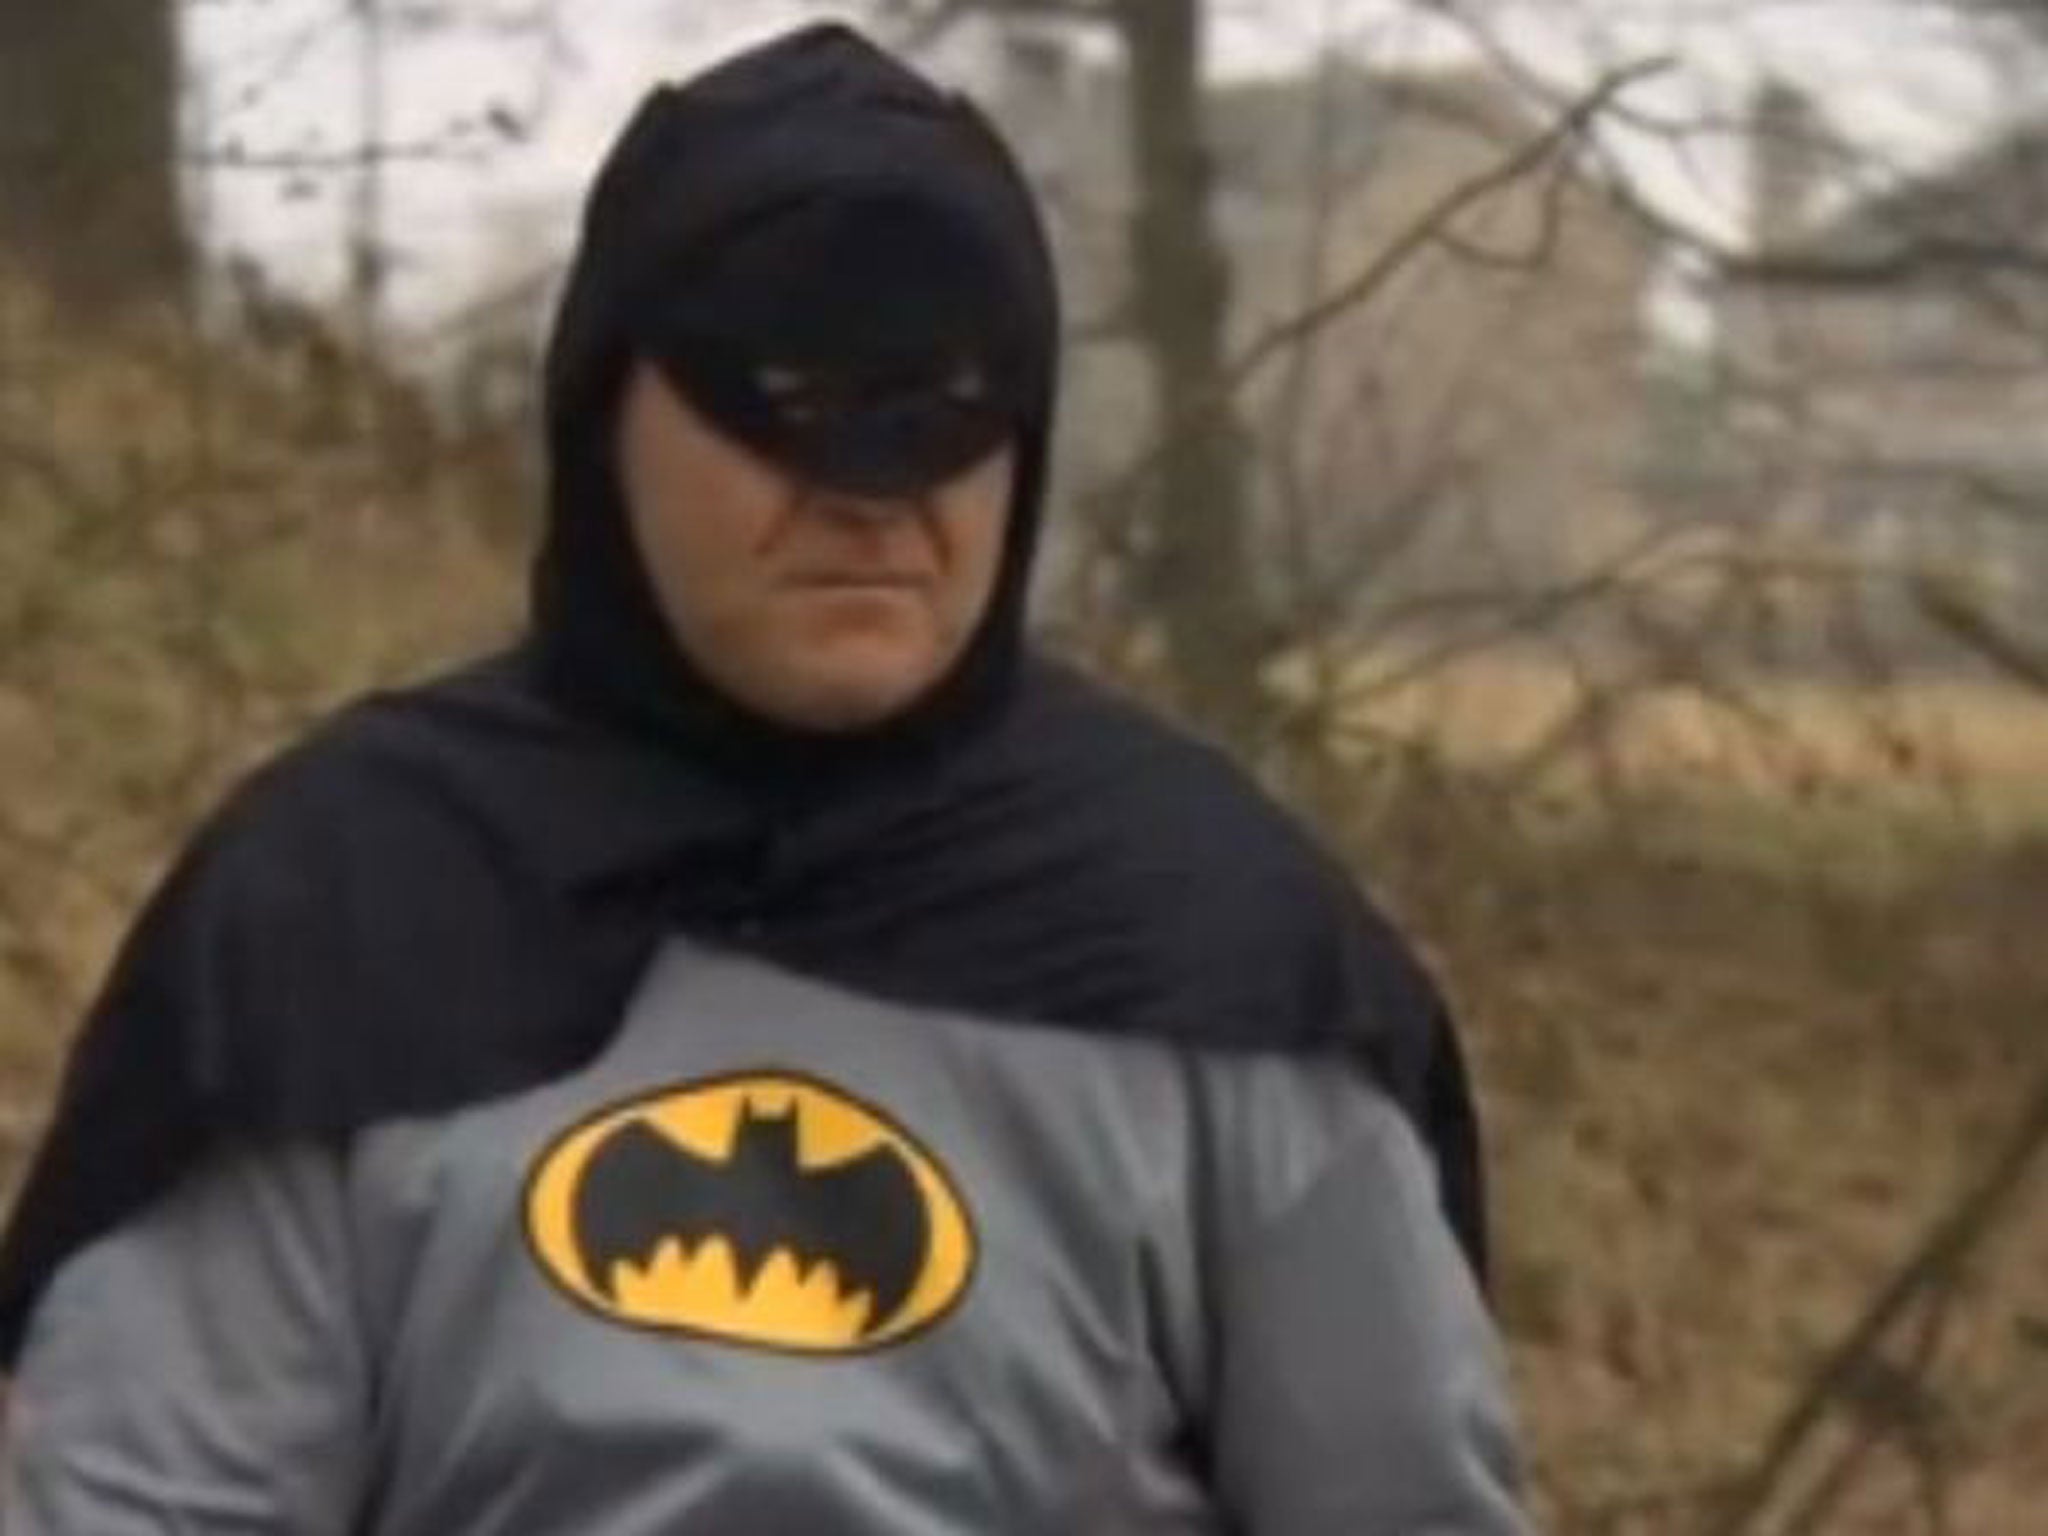 The Bradford Batman, unmasked this week